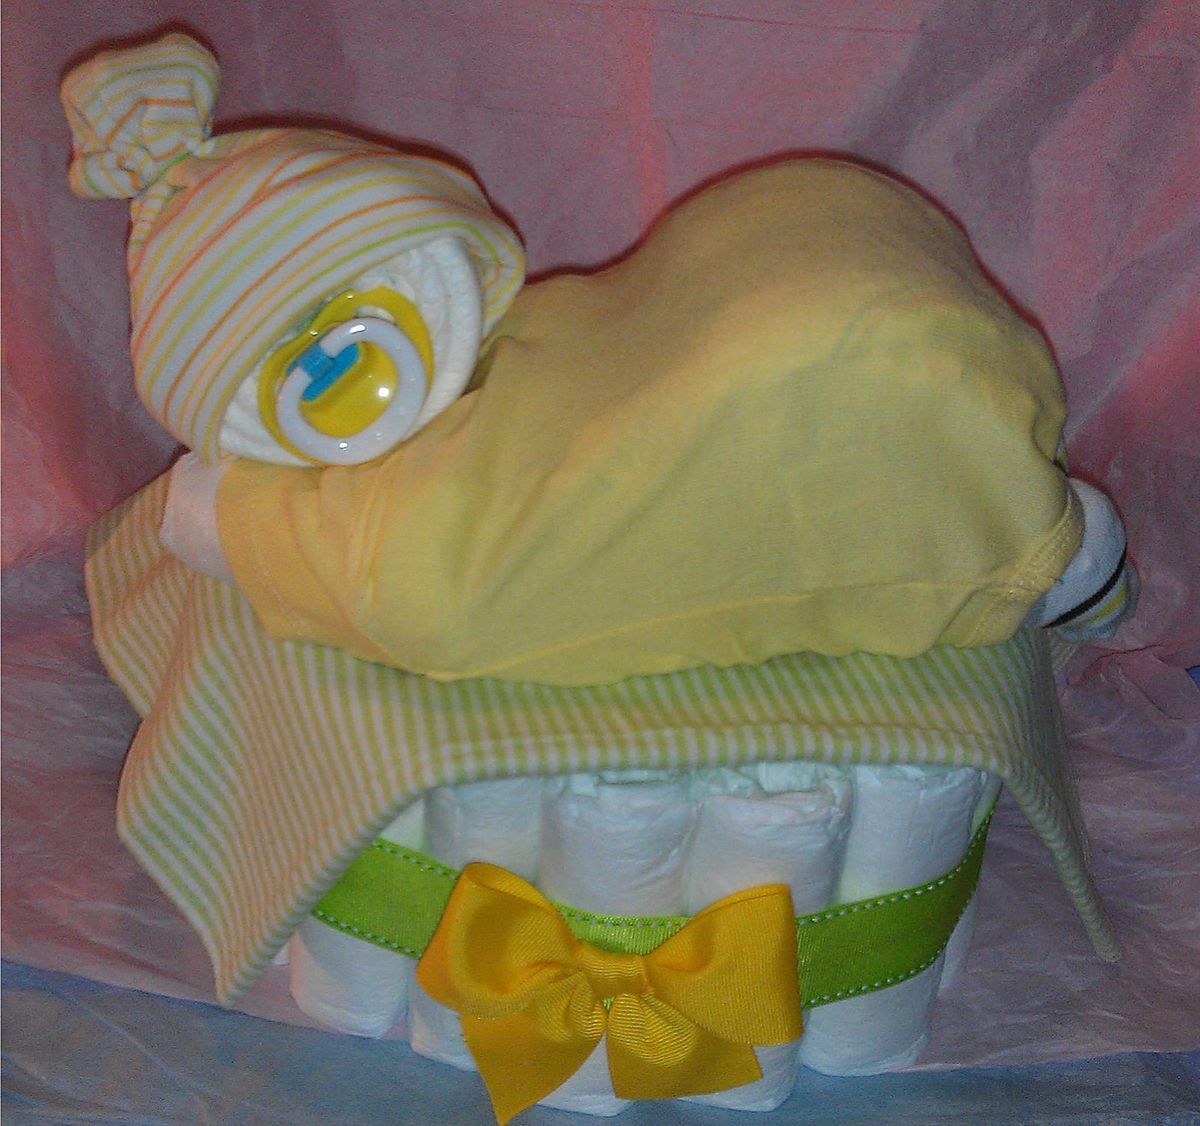 Sleeping Newborn Diaper Baby Cake Neutral Adorable Shower Centerpeice 